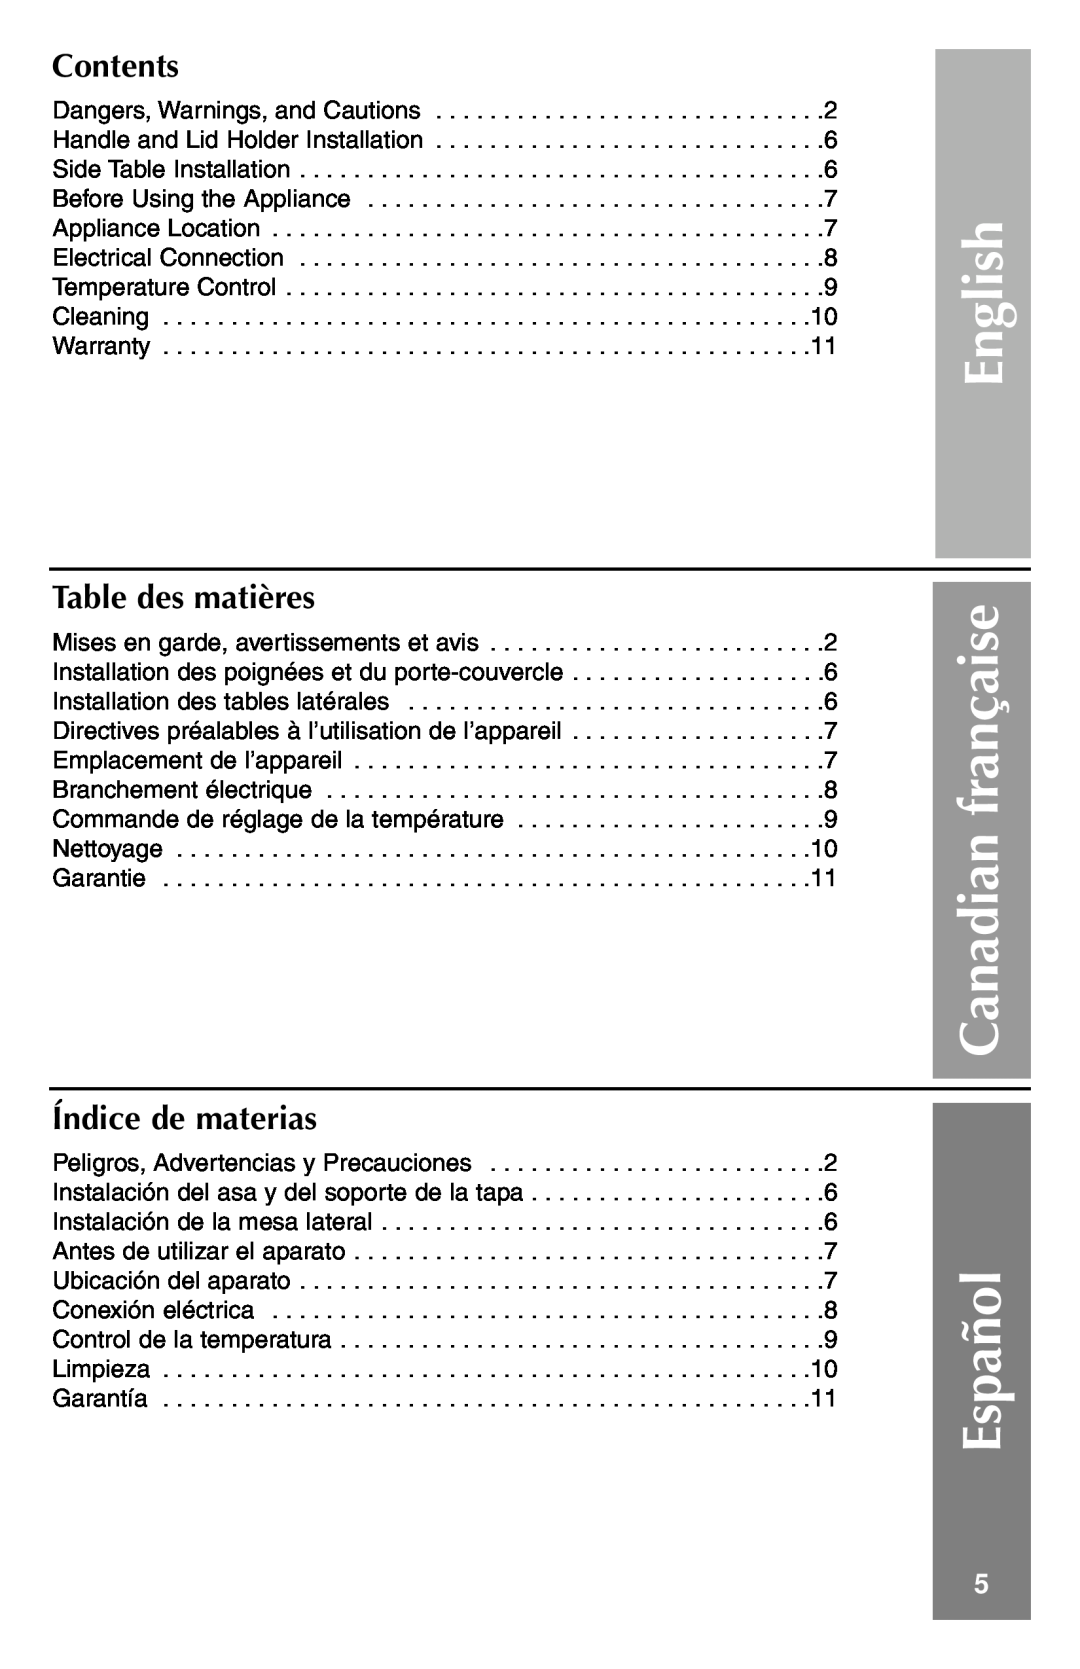 Weber Refrigerator manual English, Canadian française Español, Contents, Table des matières, Índice de materias 